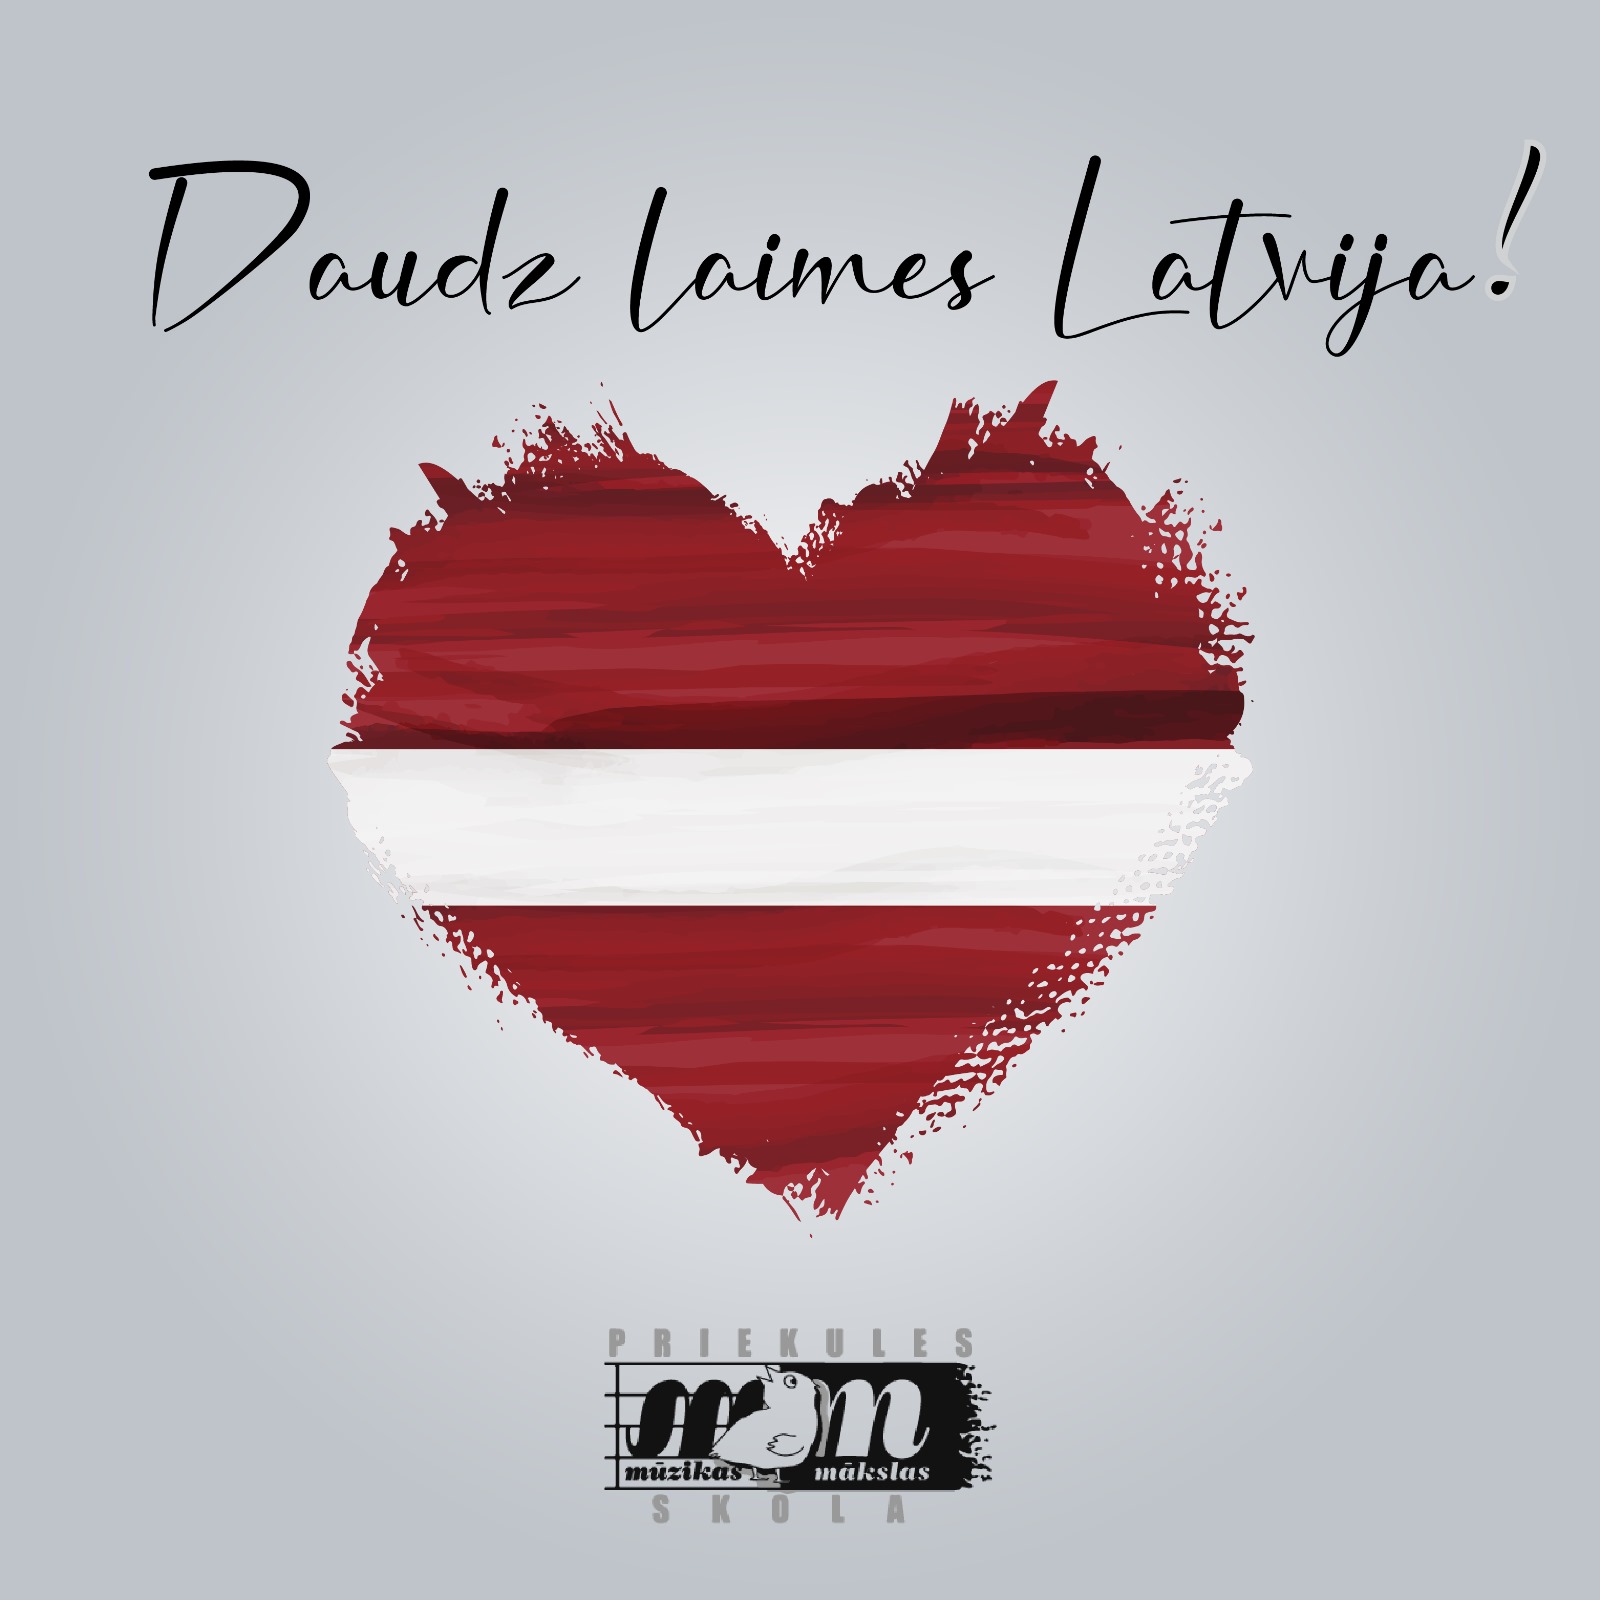 Daudz laimes Latvija!